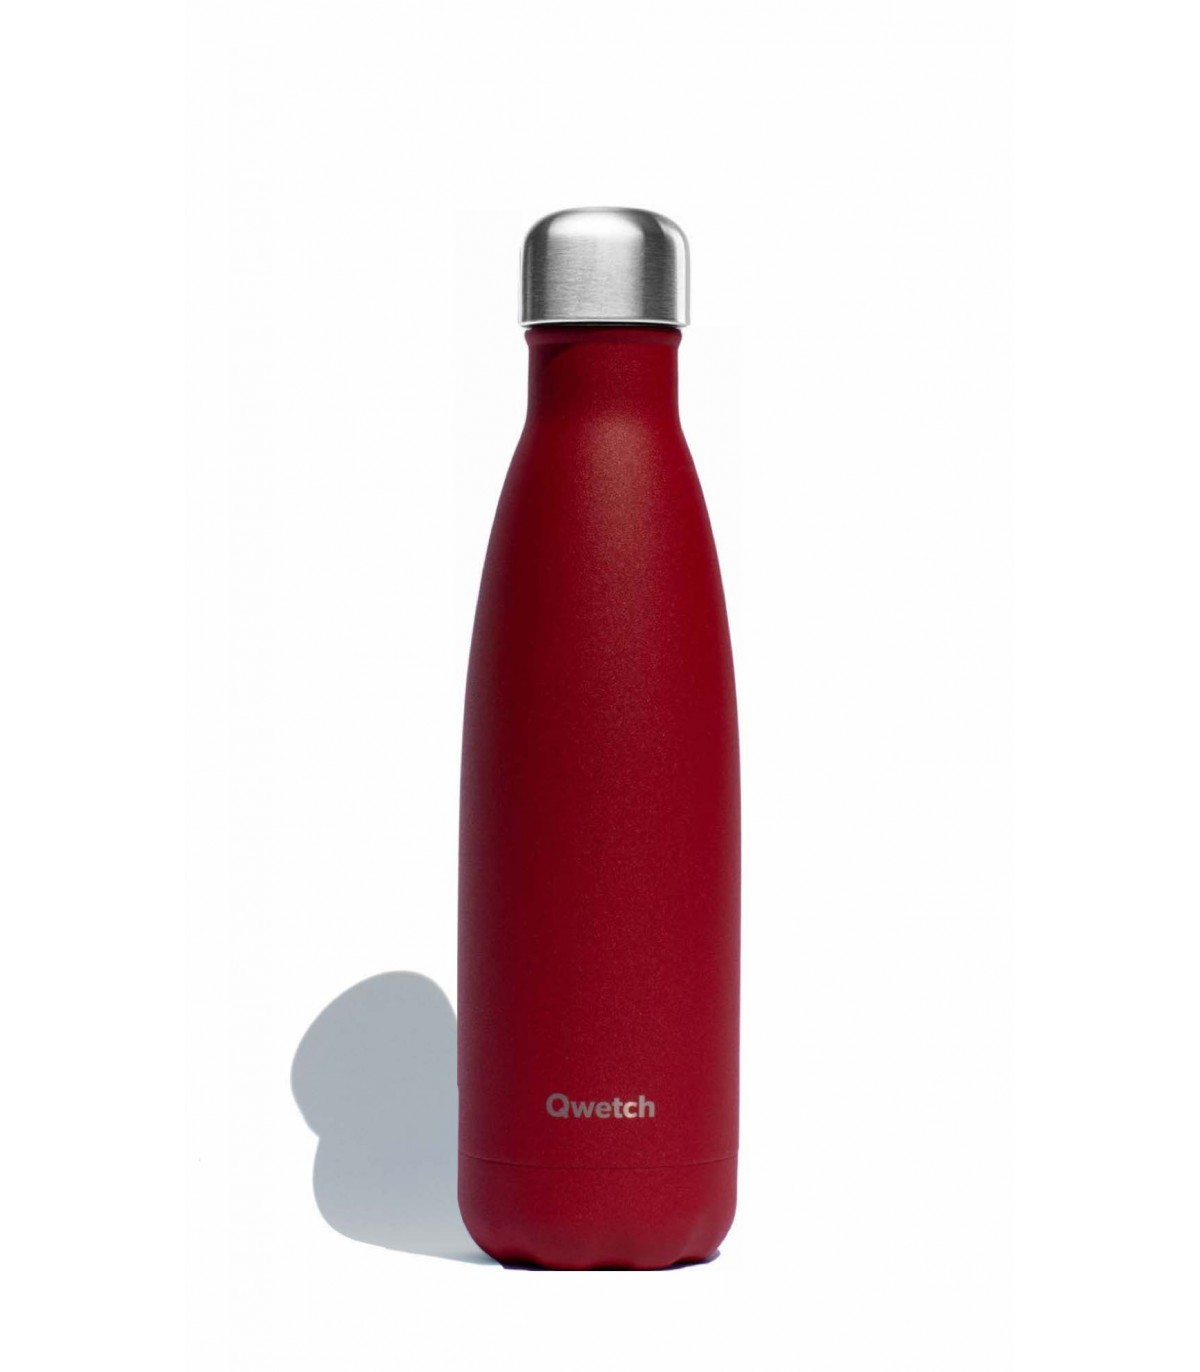 https://takaterra.com/1519-superlarge_default/granite-red-bottle-500-qwetch.jpg